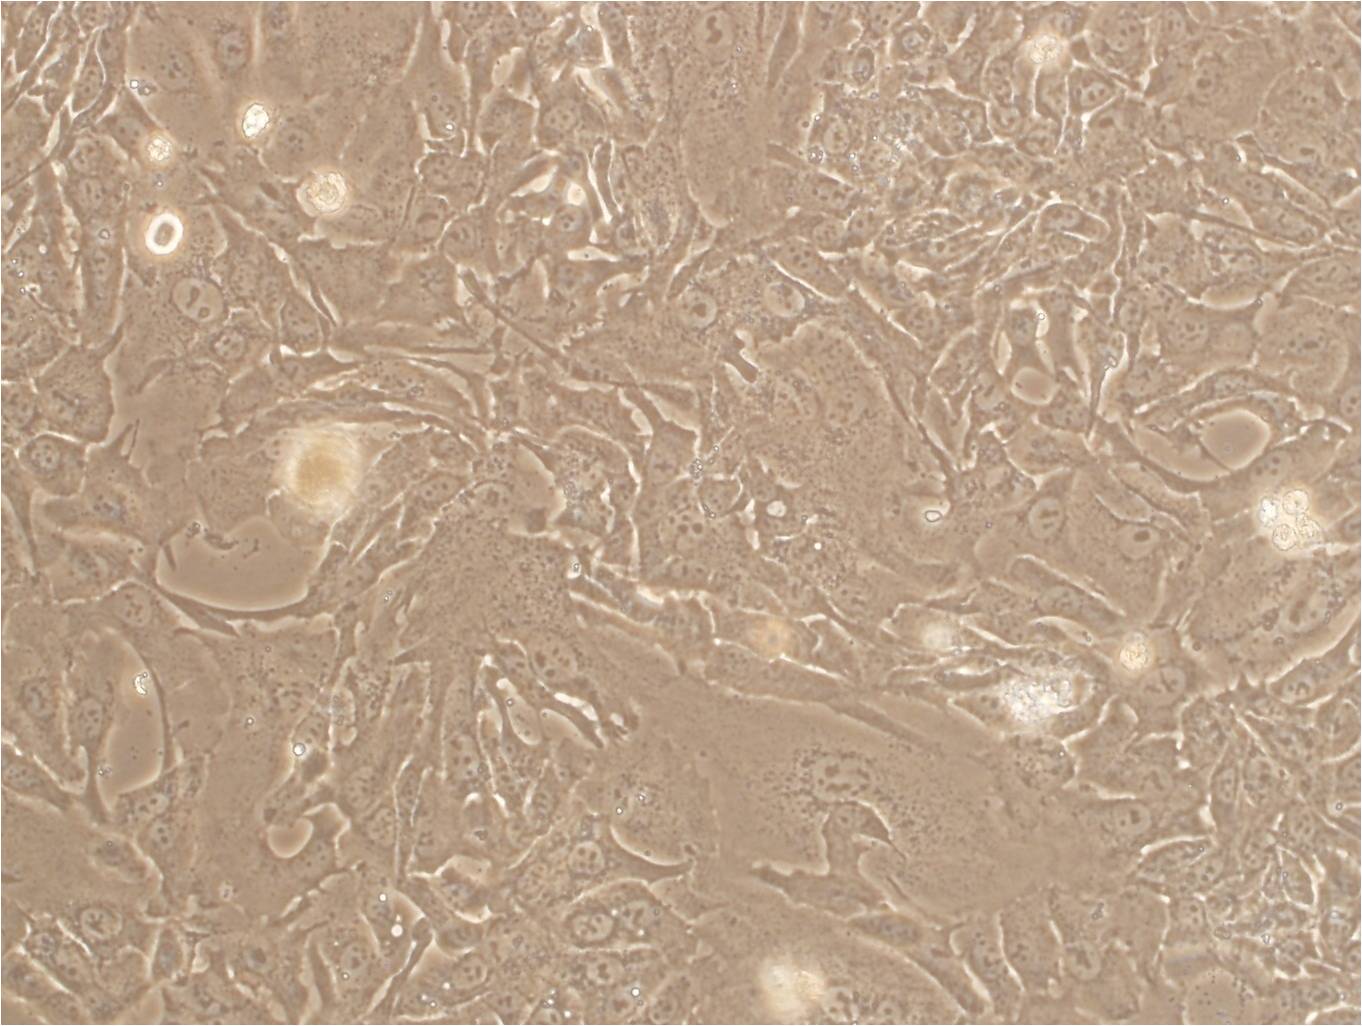 KOSC-2:人口腔鳞状癌复苏细胞(提供STR鉴定图谱),KOSC-2